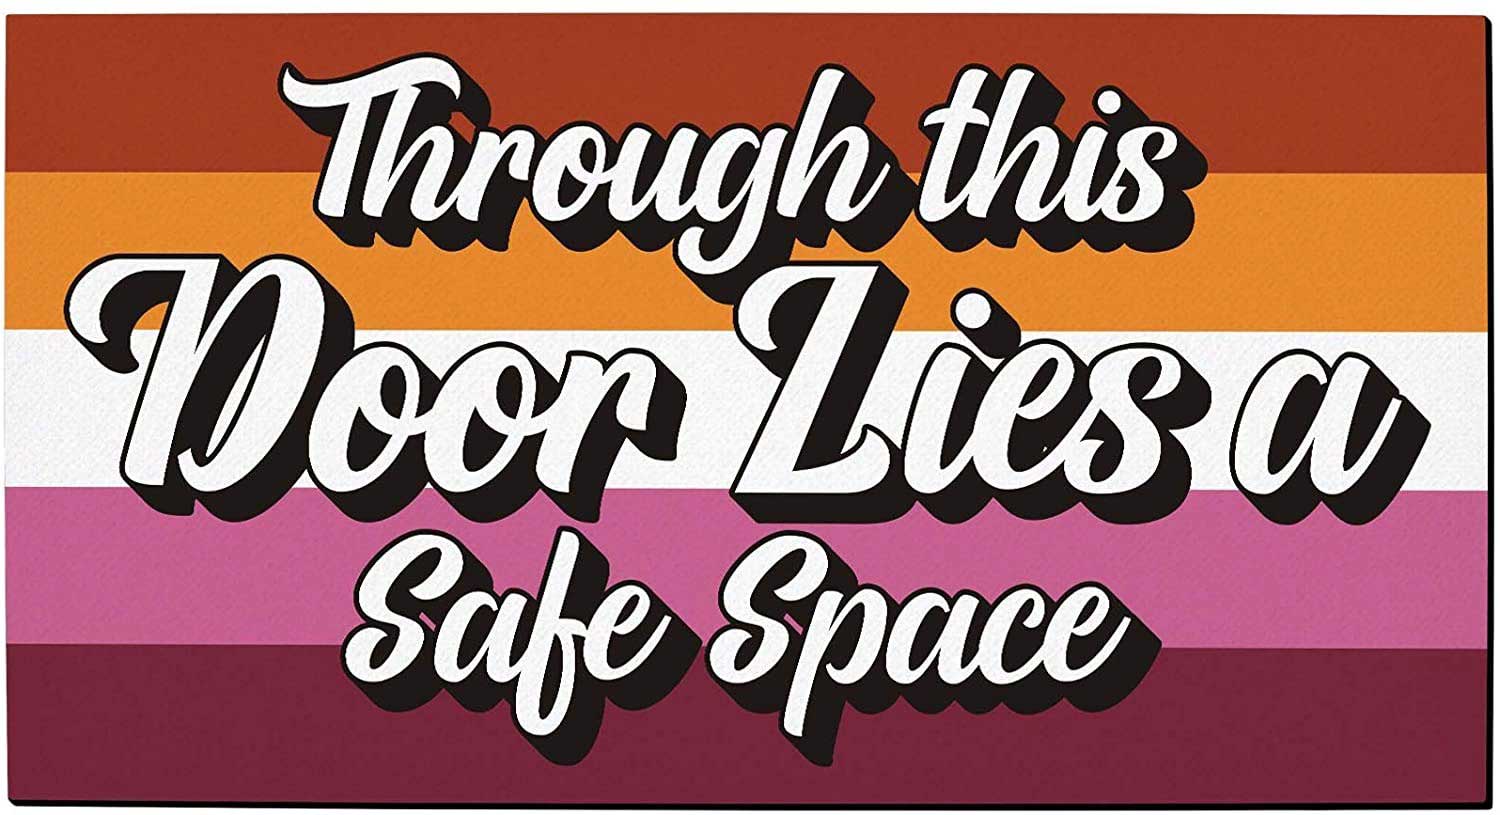 Lesbian Pride Mat Lesbian Doormat Through This Door Lies A Safe Space Lesbian Gifts Decorative Doormat Lesbian